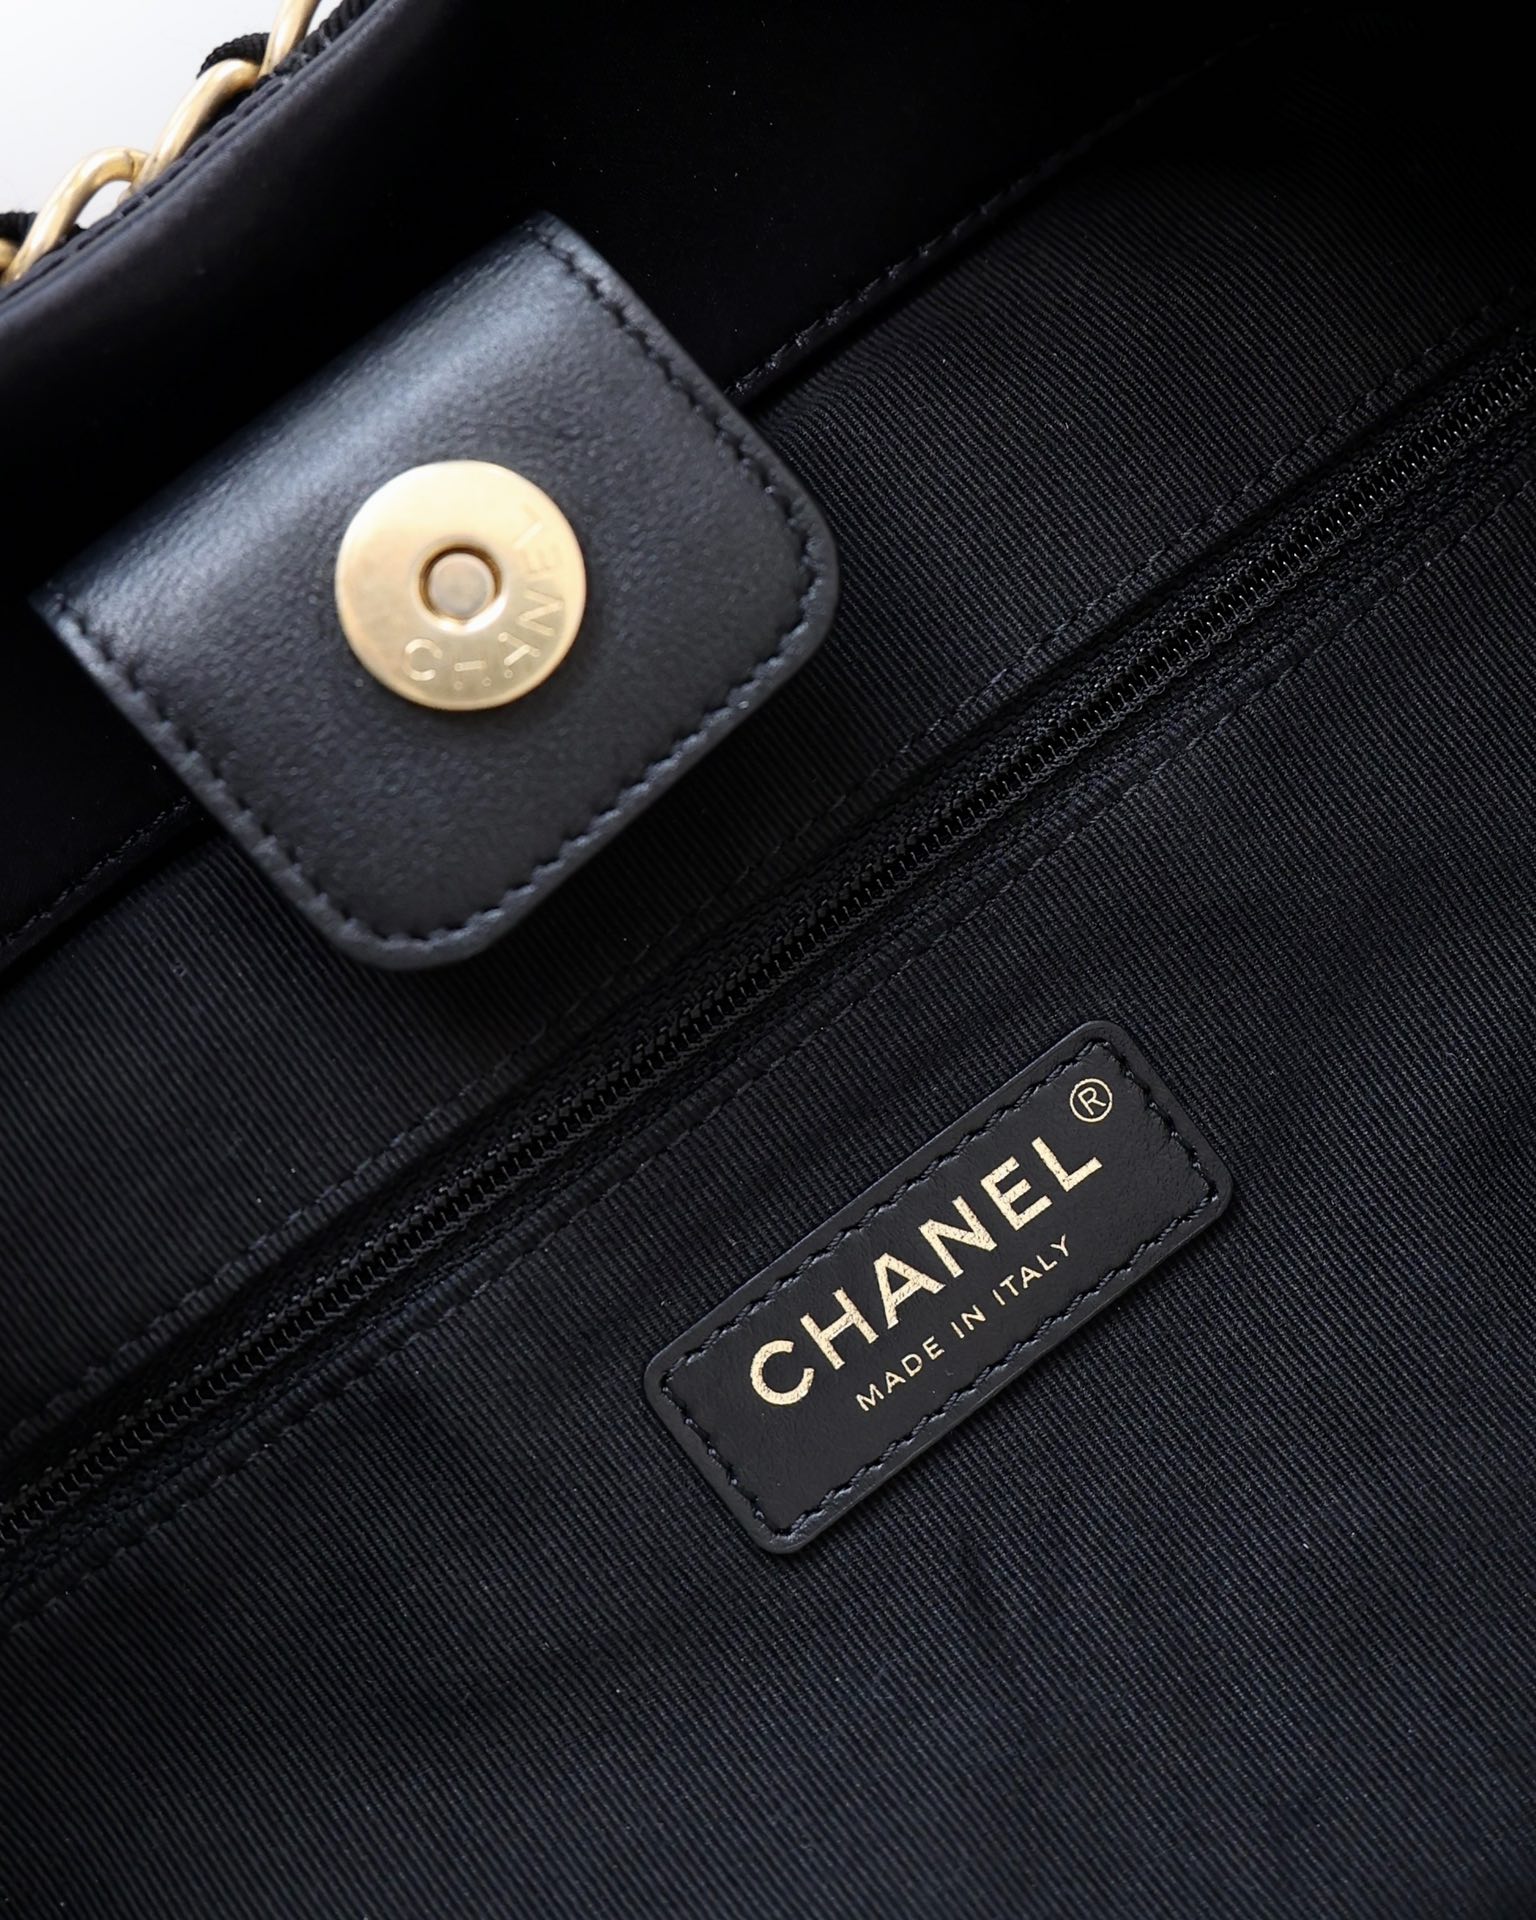 CHANEL 22P 最新黑马尼龙shoppin购物袋 AS3152黑色